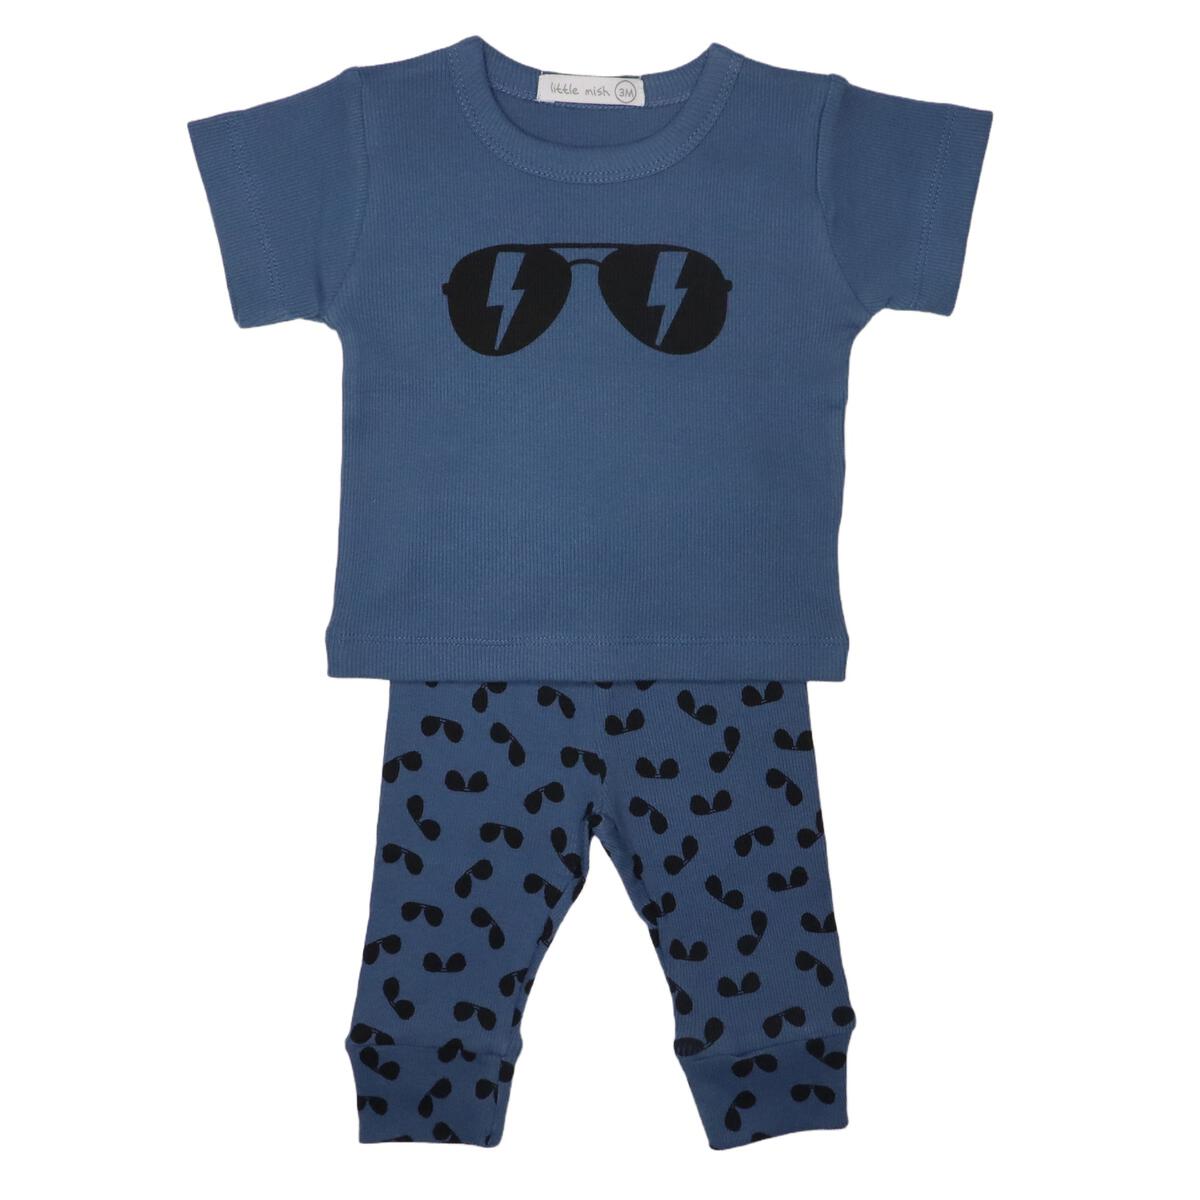 Ribbed Denim Sunglasses Tee & Pant Set - Twinkle Twinkle Little One